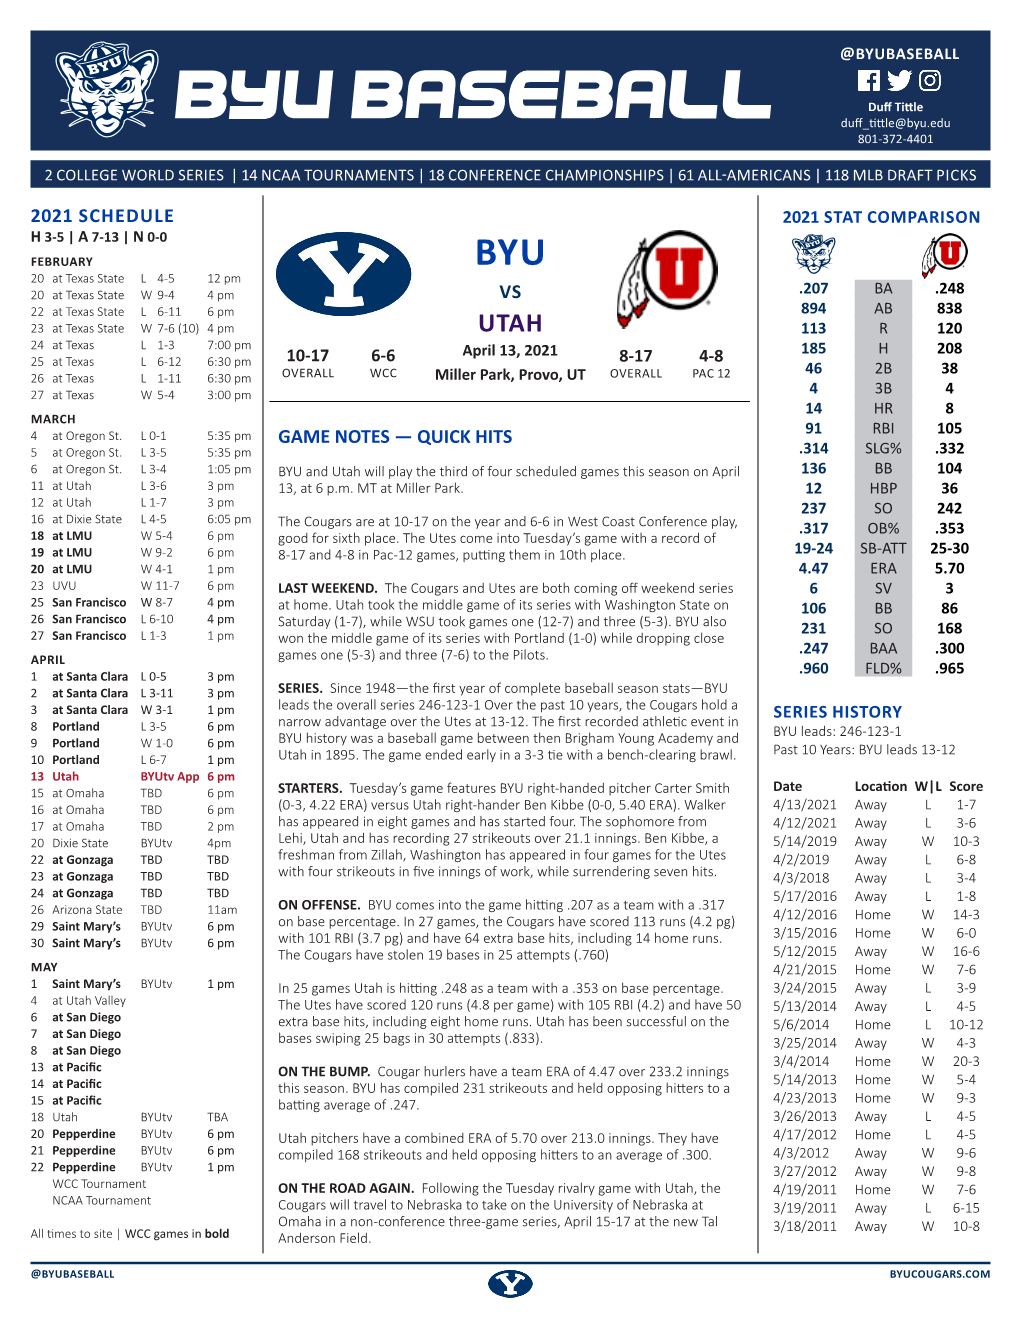 BYU-Utah Game 3 Notes